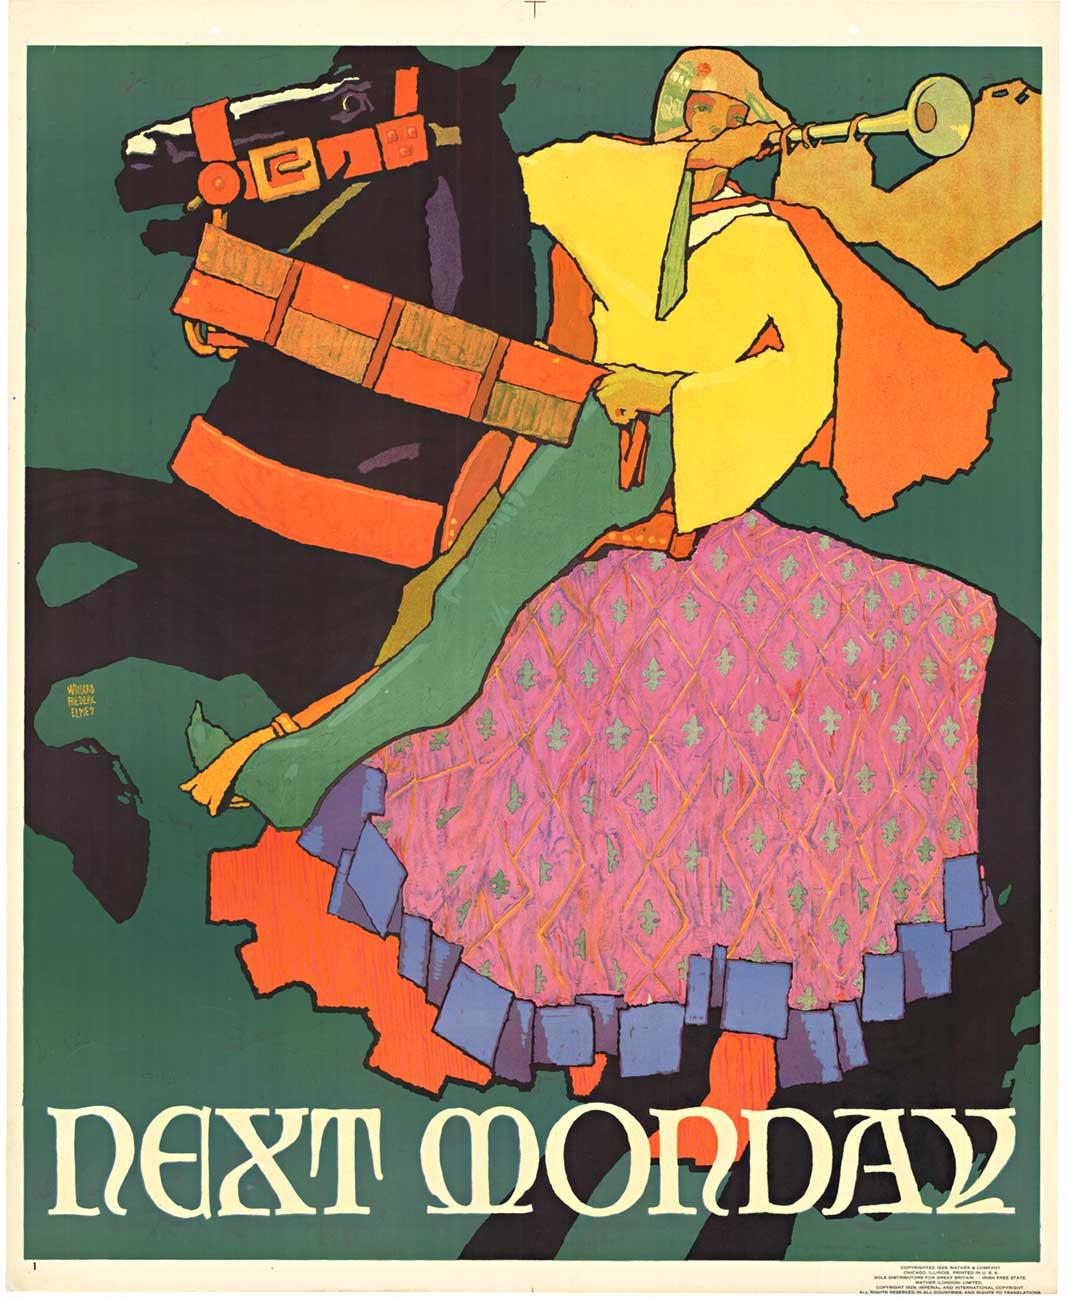 Original "Next Monday" vintage 1929 Mather Work Incentive poster